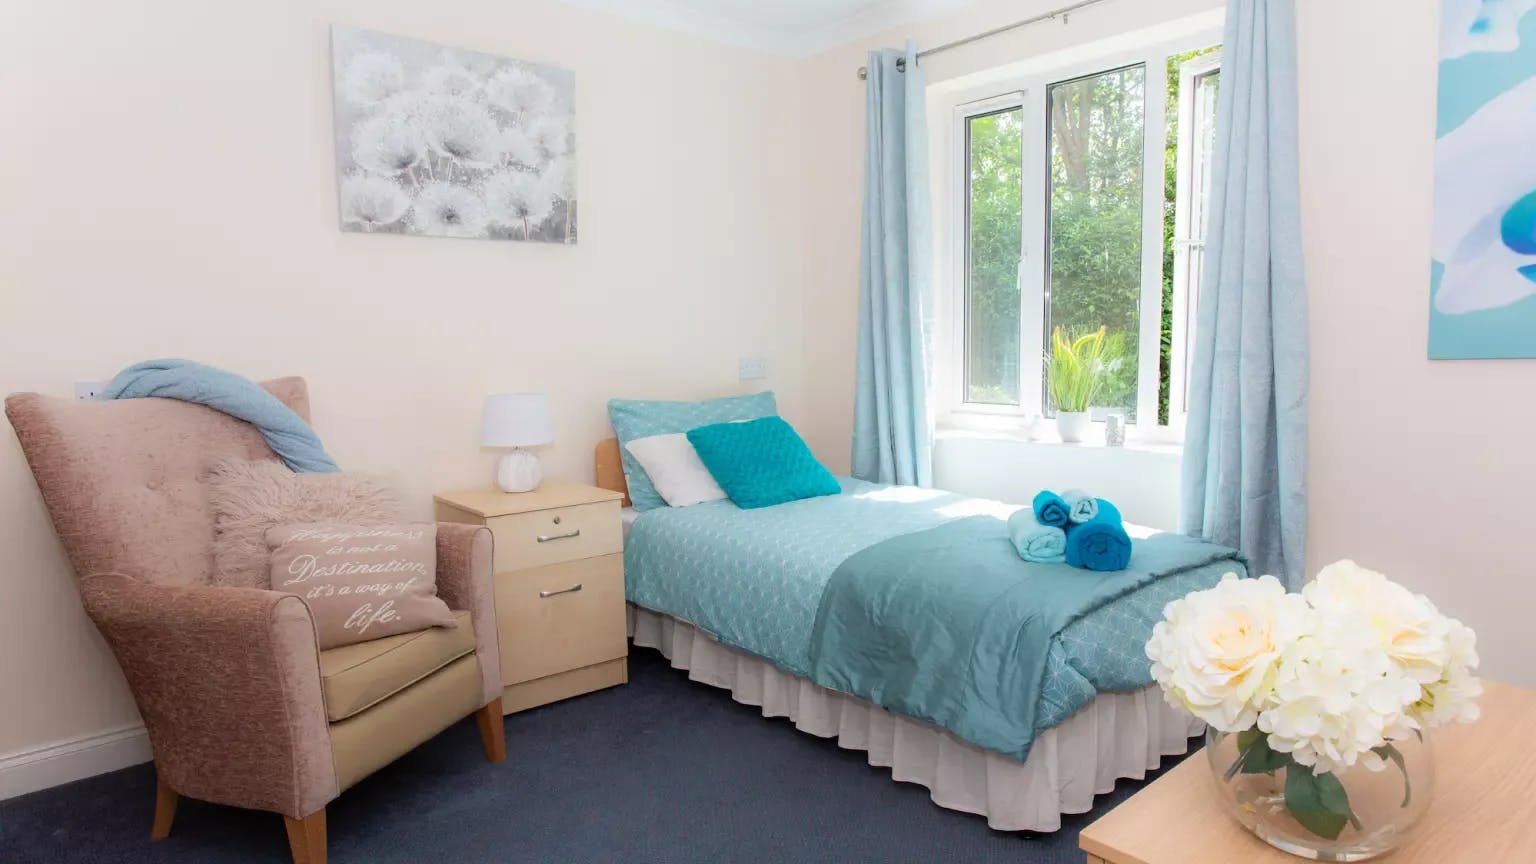 Bedroom of Vesta Lodge care home in St Albans, Hertfordshire